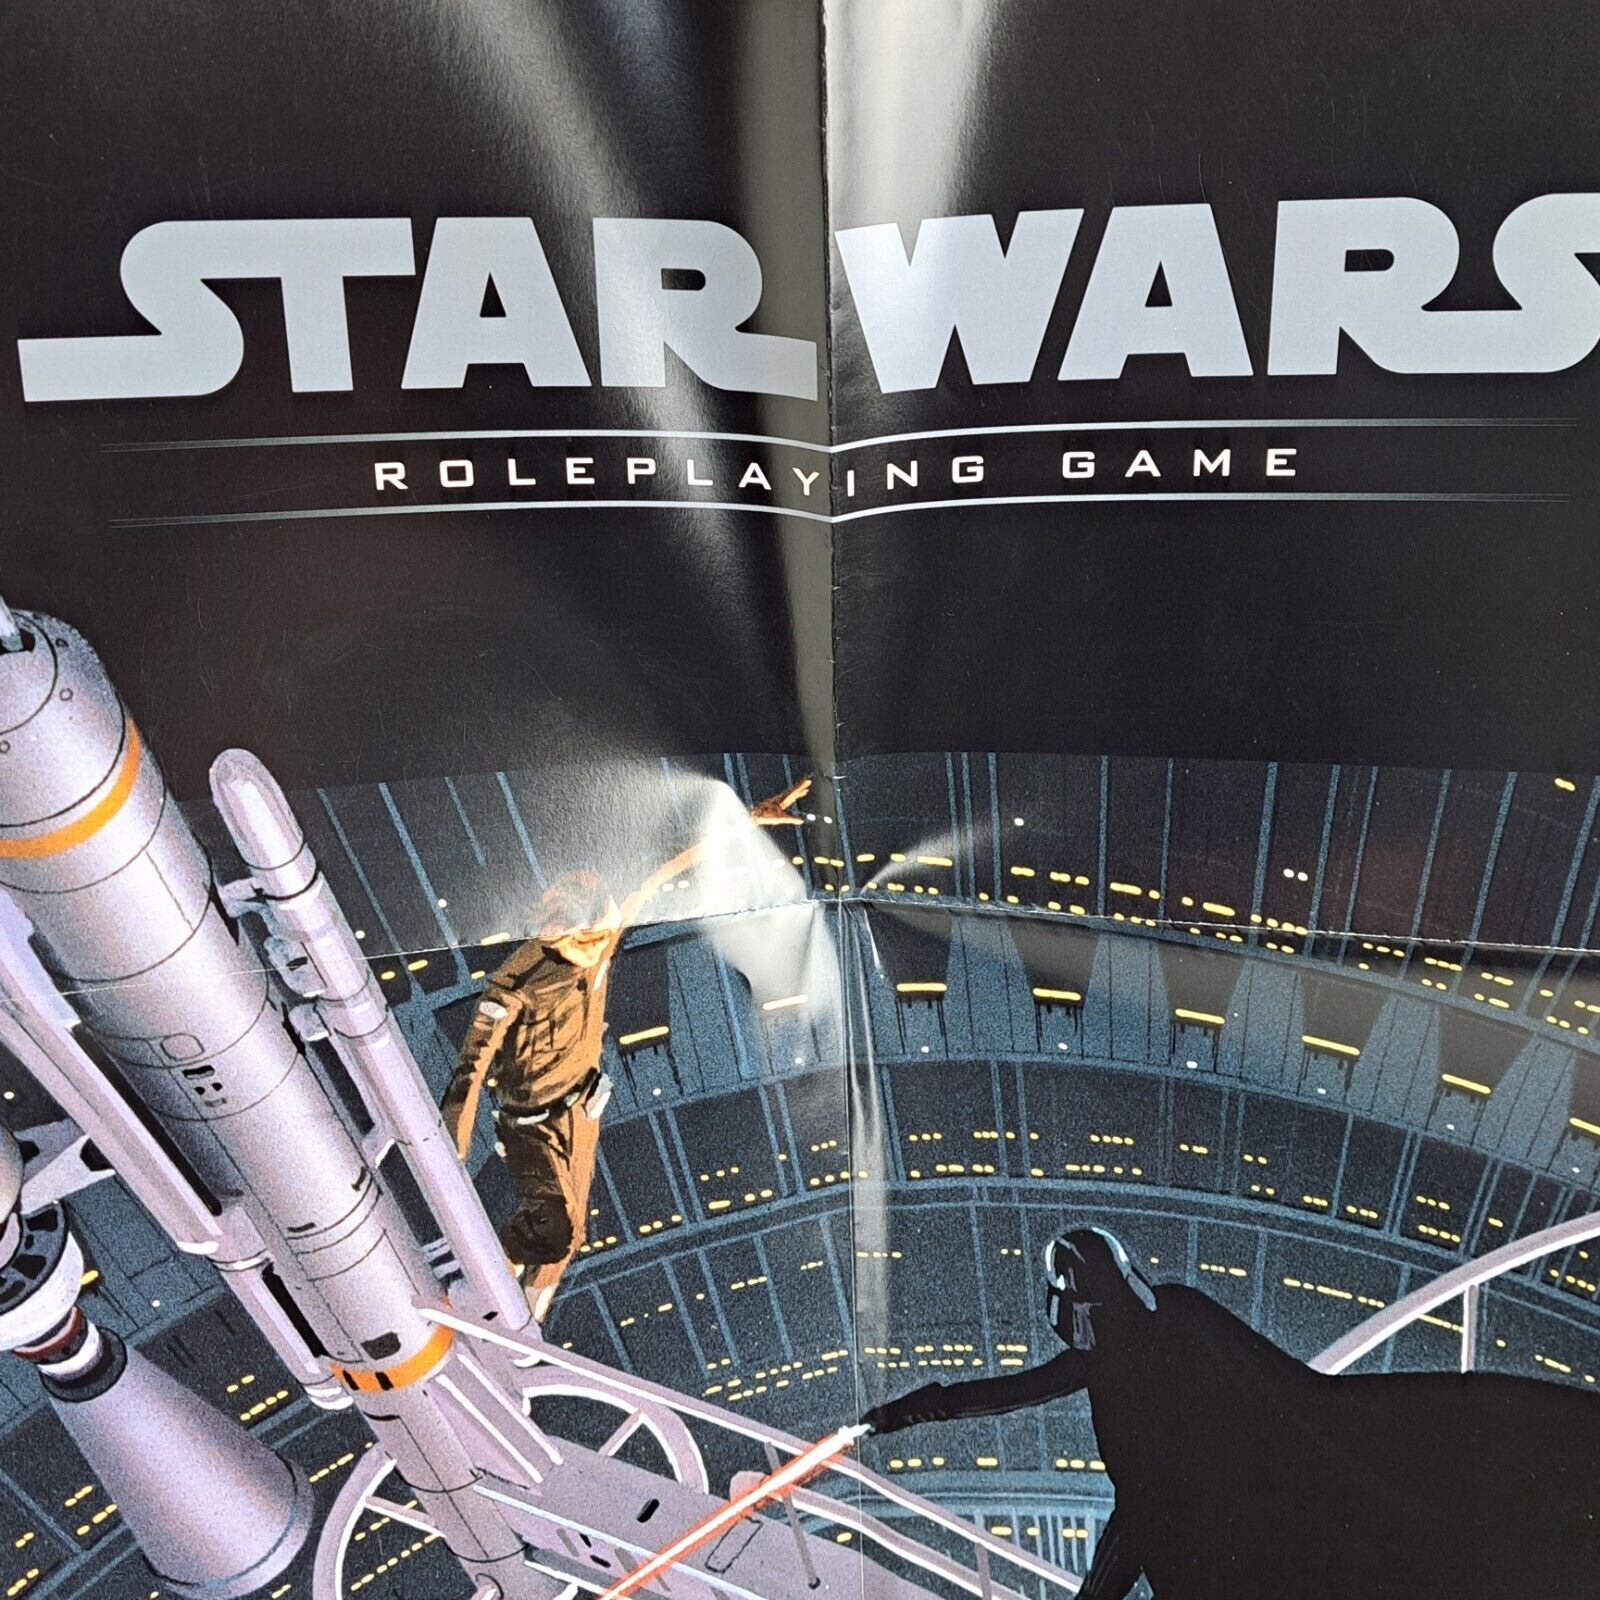 Vintage 2000 Darth Vader Star Wars TCG Dealer Poster by Wizards of the Coast